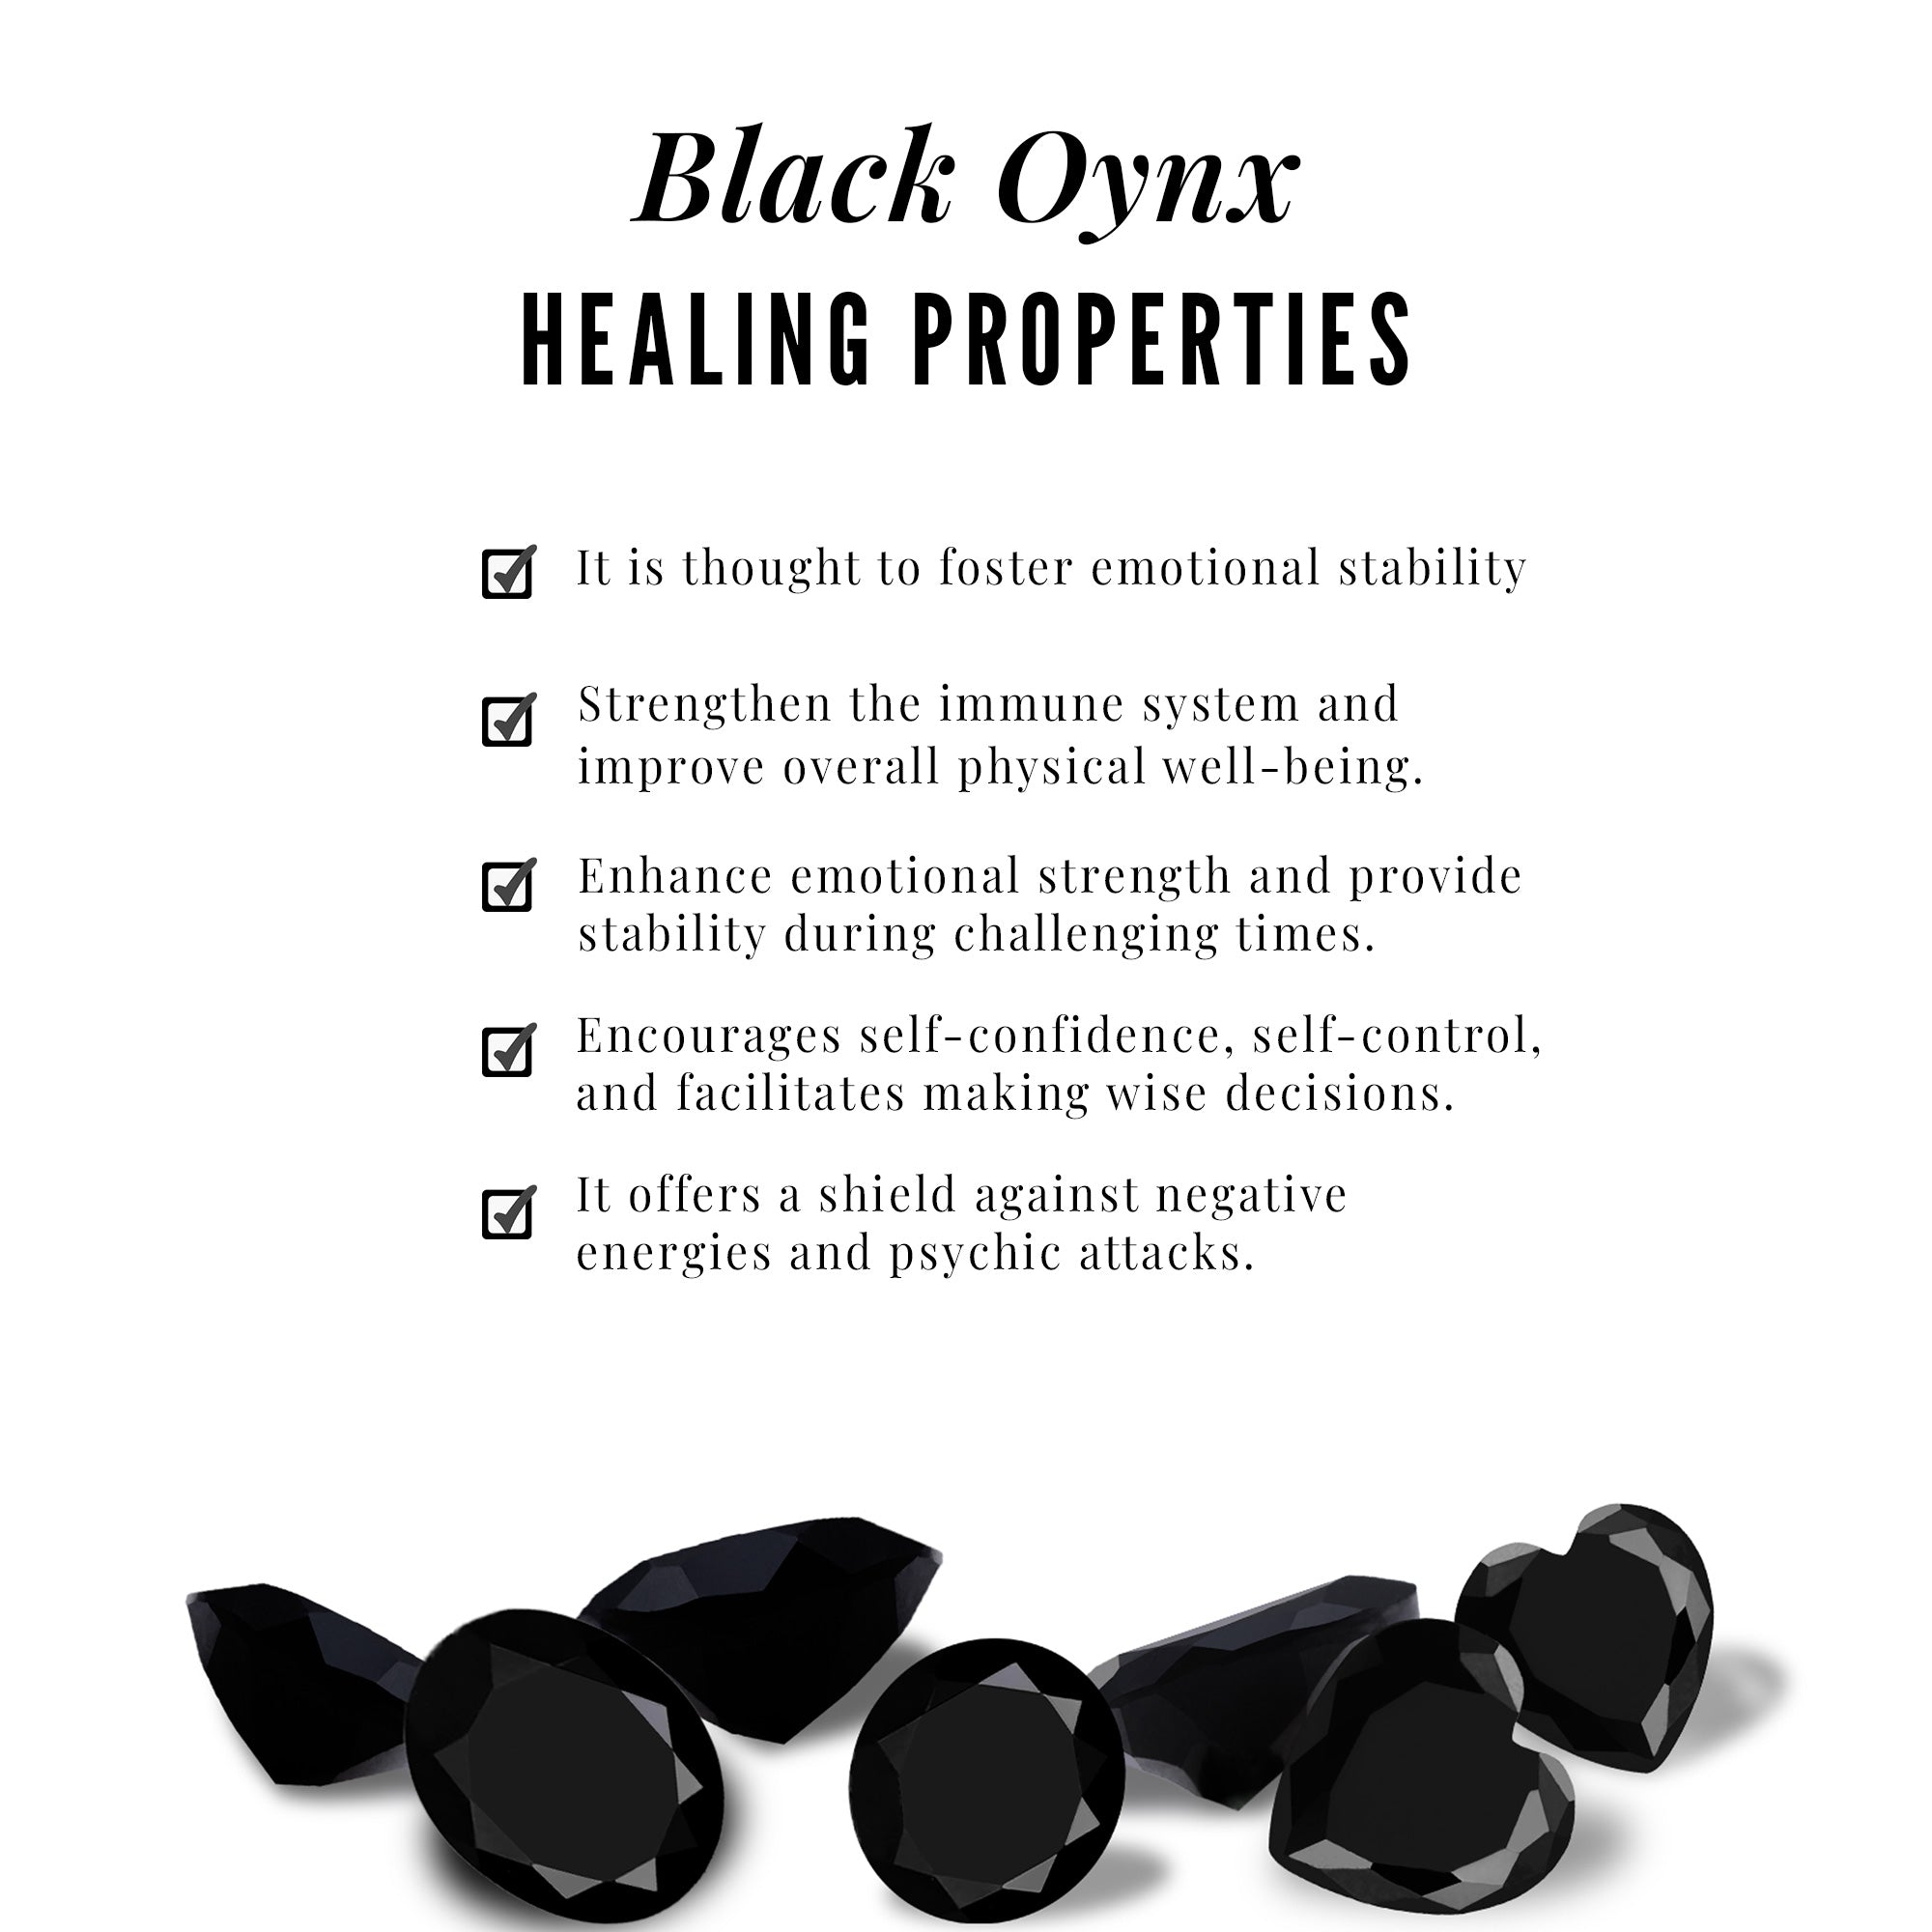 3/4 CT Round Black Onyx and Diamond Open Circle Stud Earrings Black Onyx - ( AAA ) - Quality - Rosec Jewels